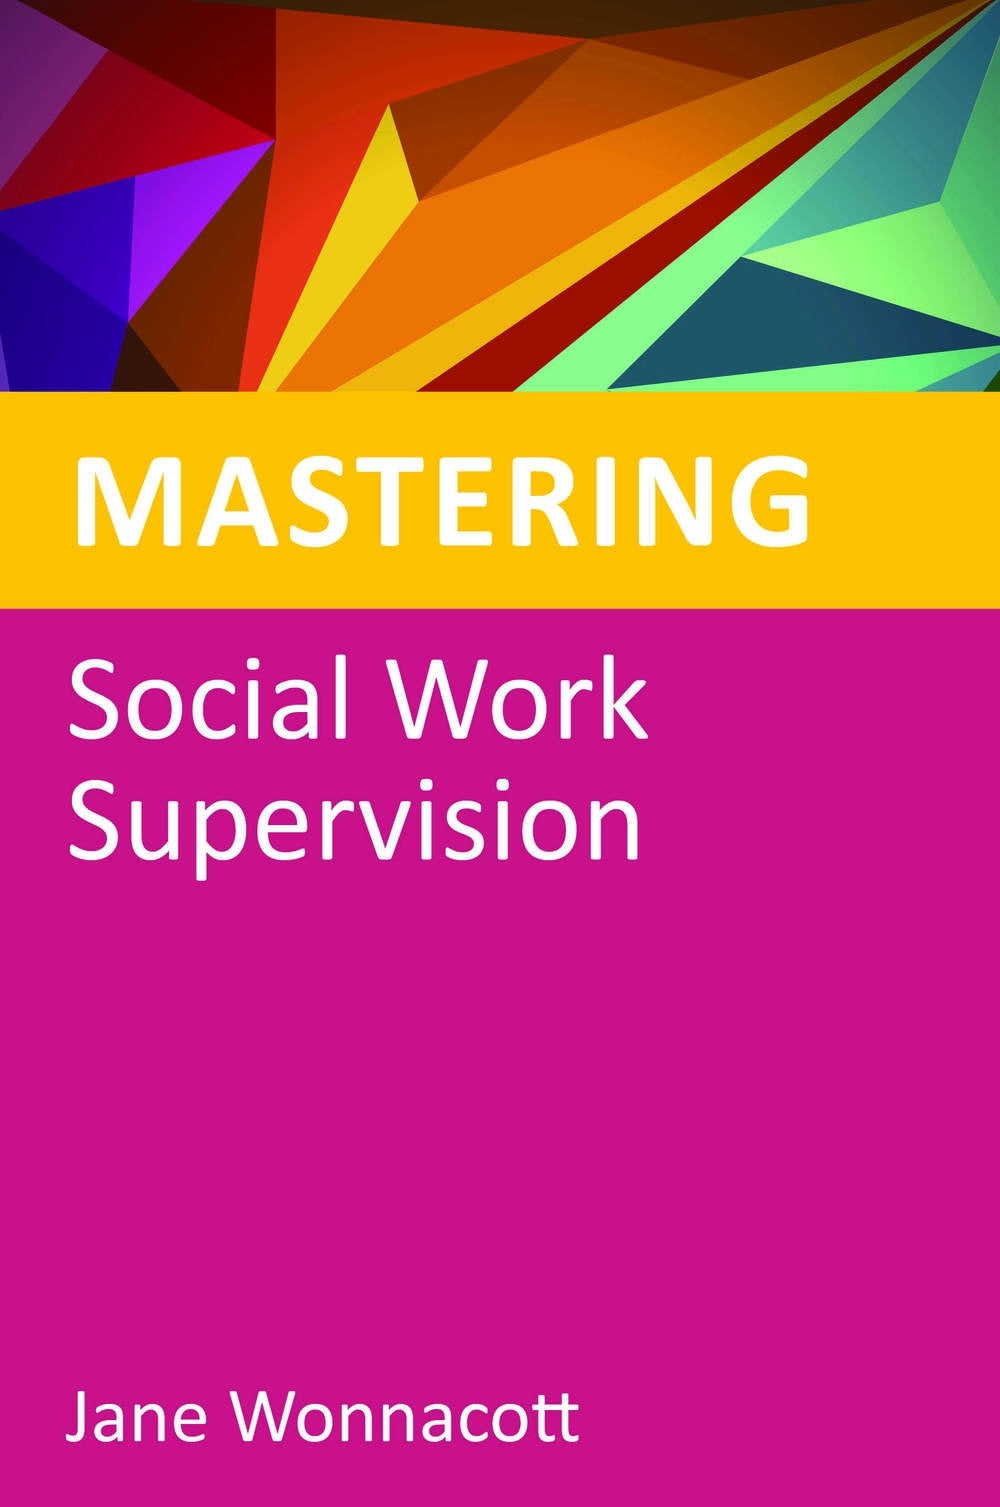 Mastering Social Work Supervision by Jane Wonnacott